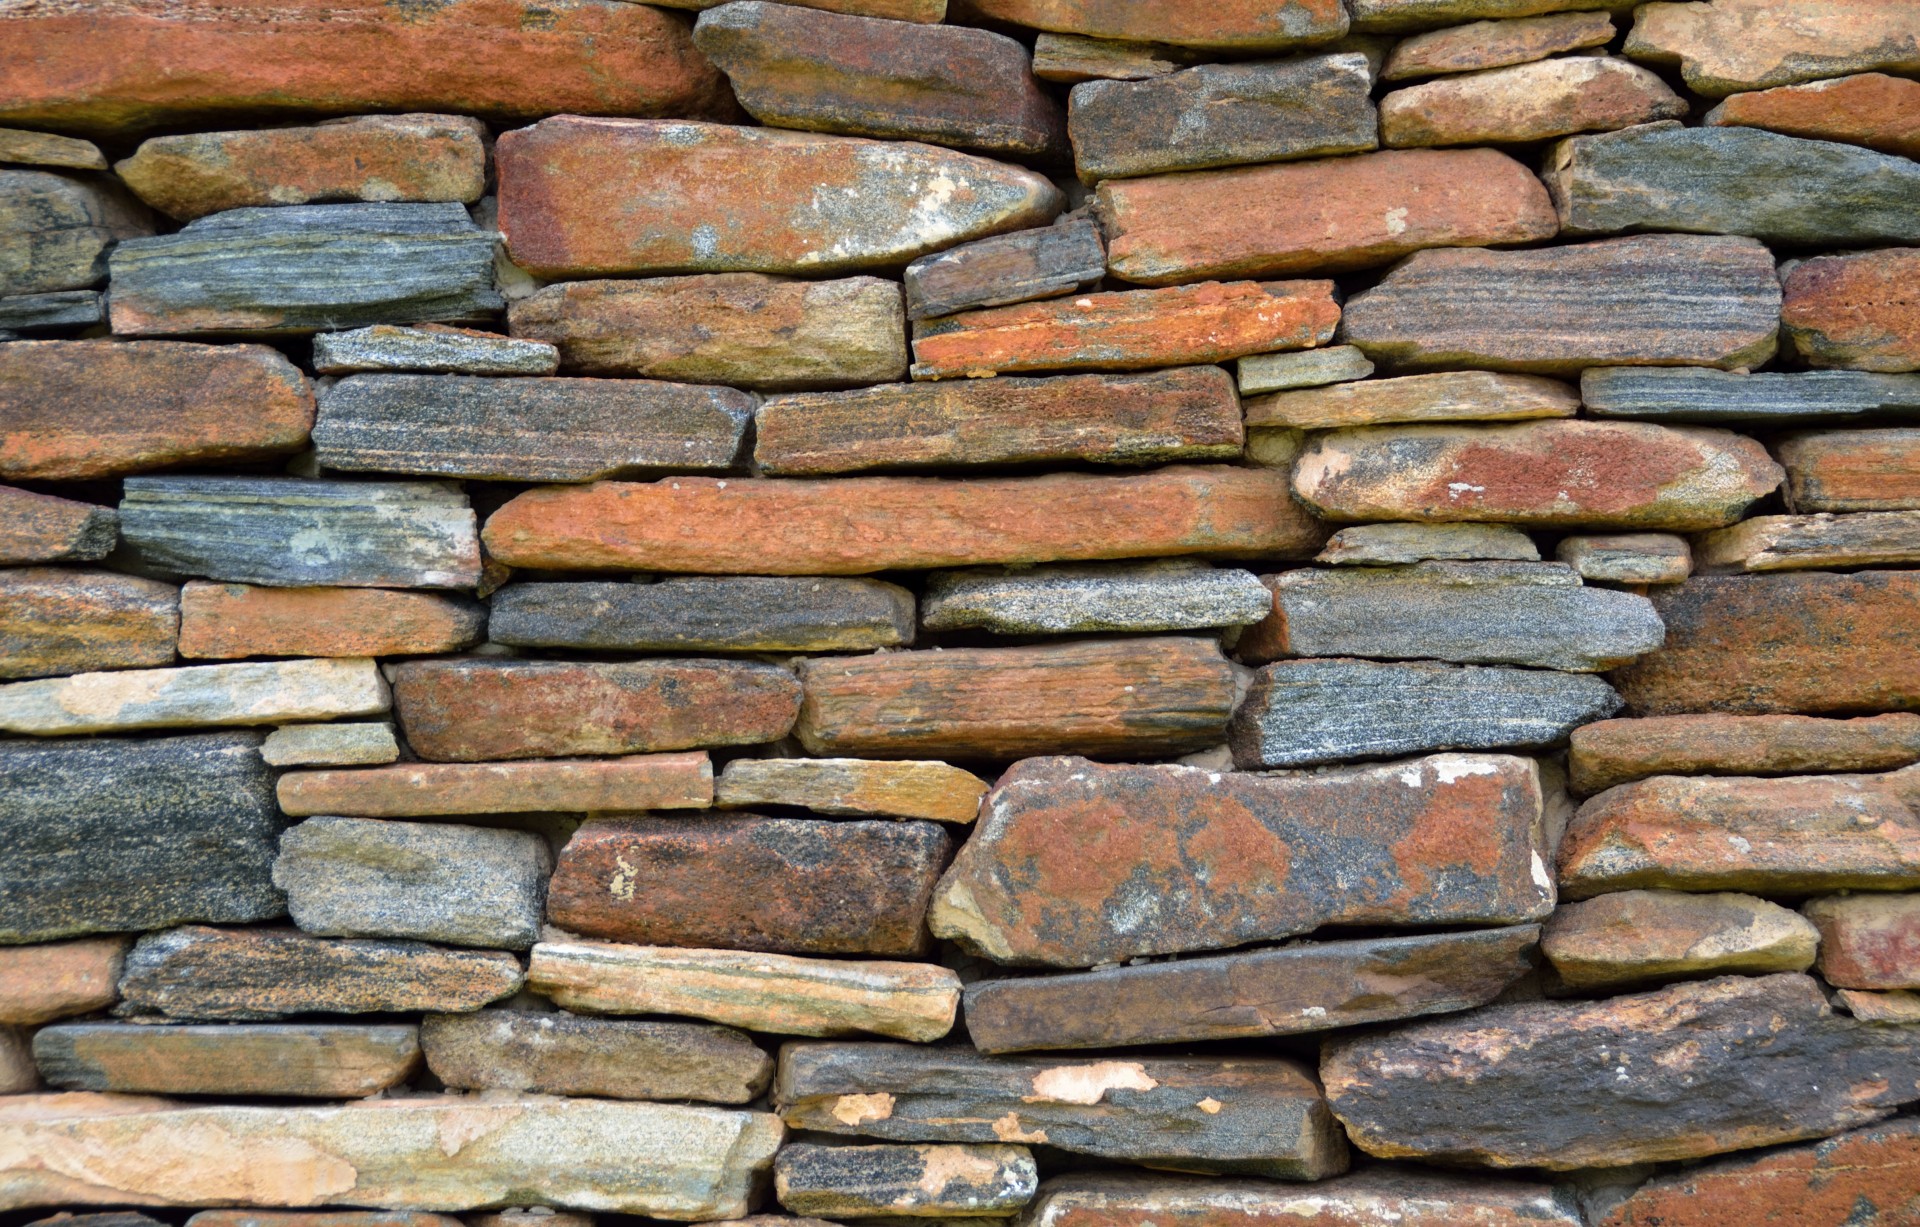 Stone and brick wall at a historic site Georgia, USA